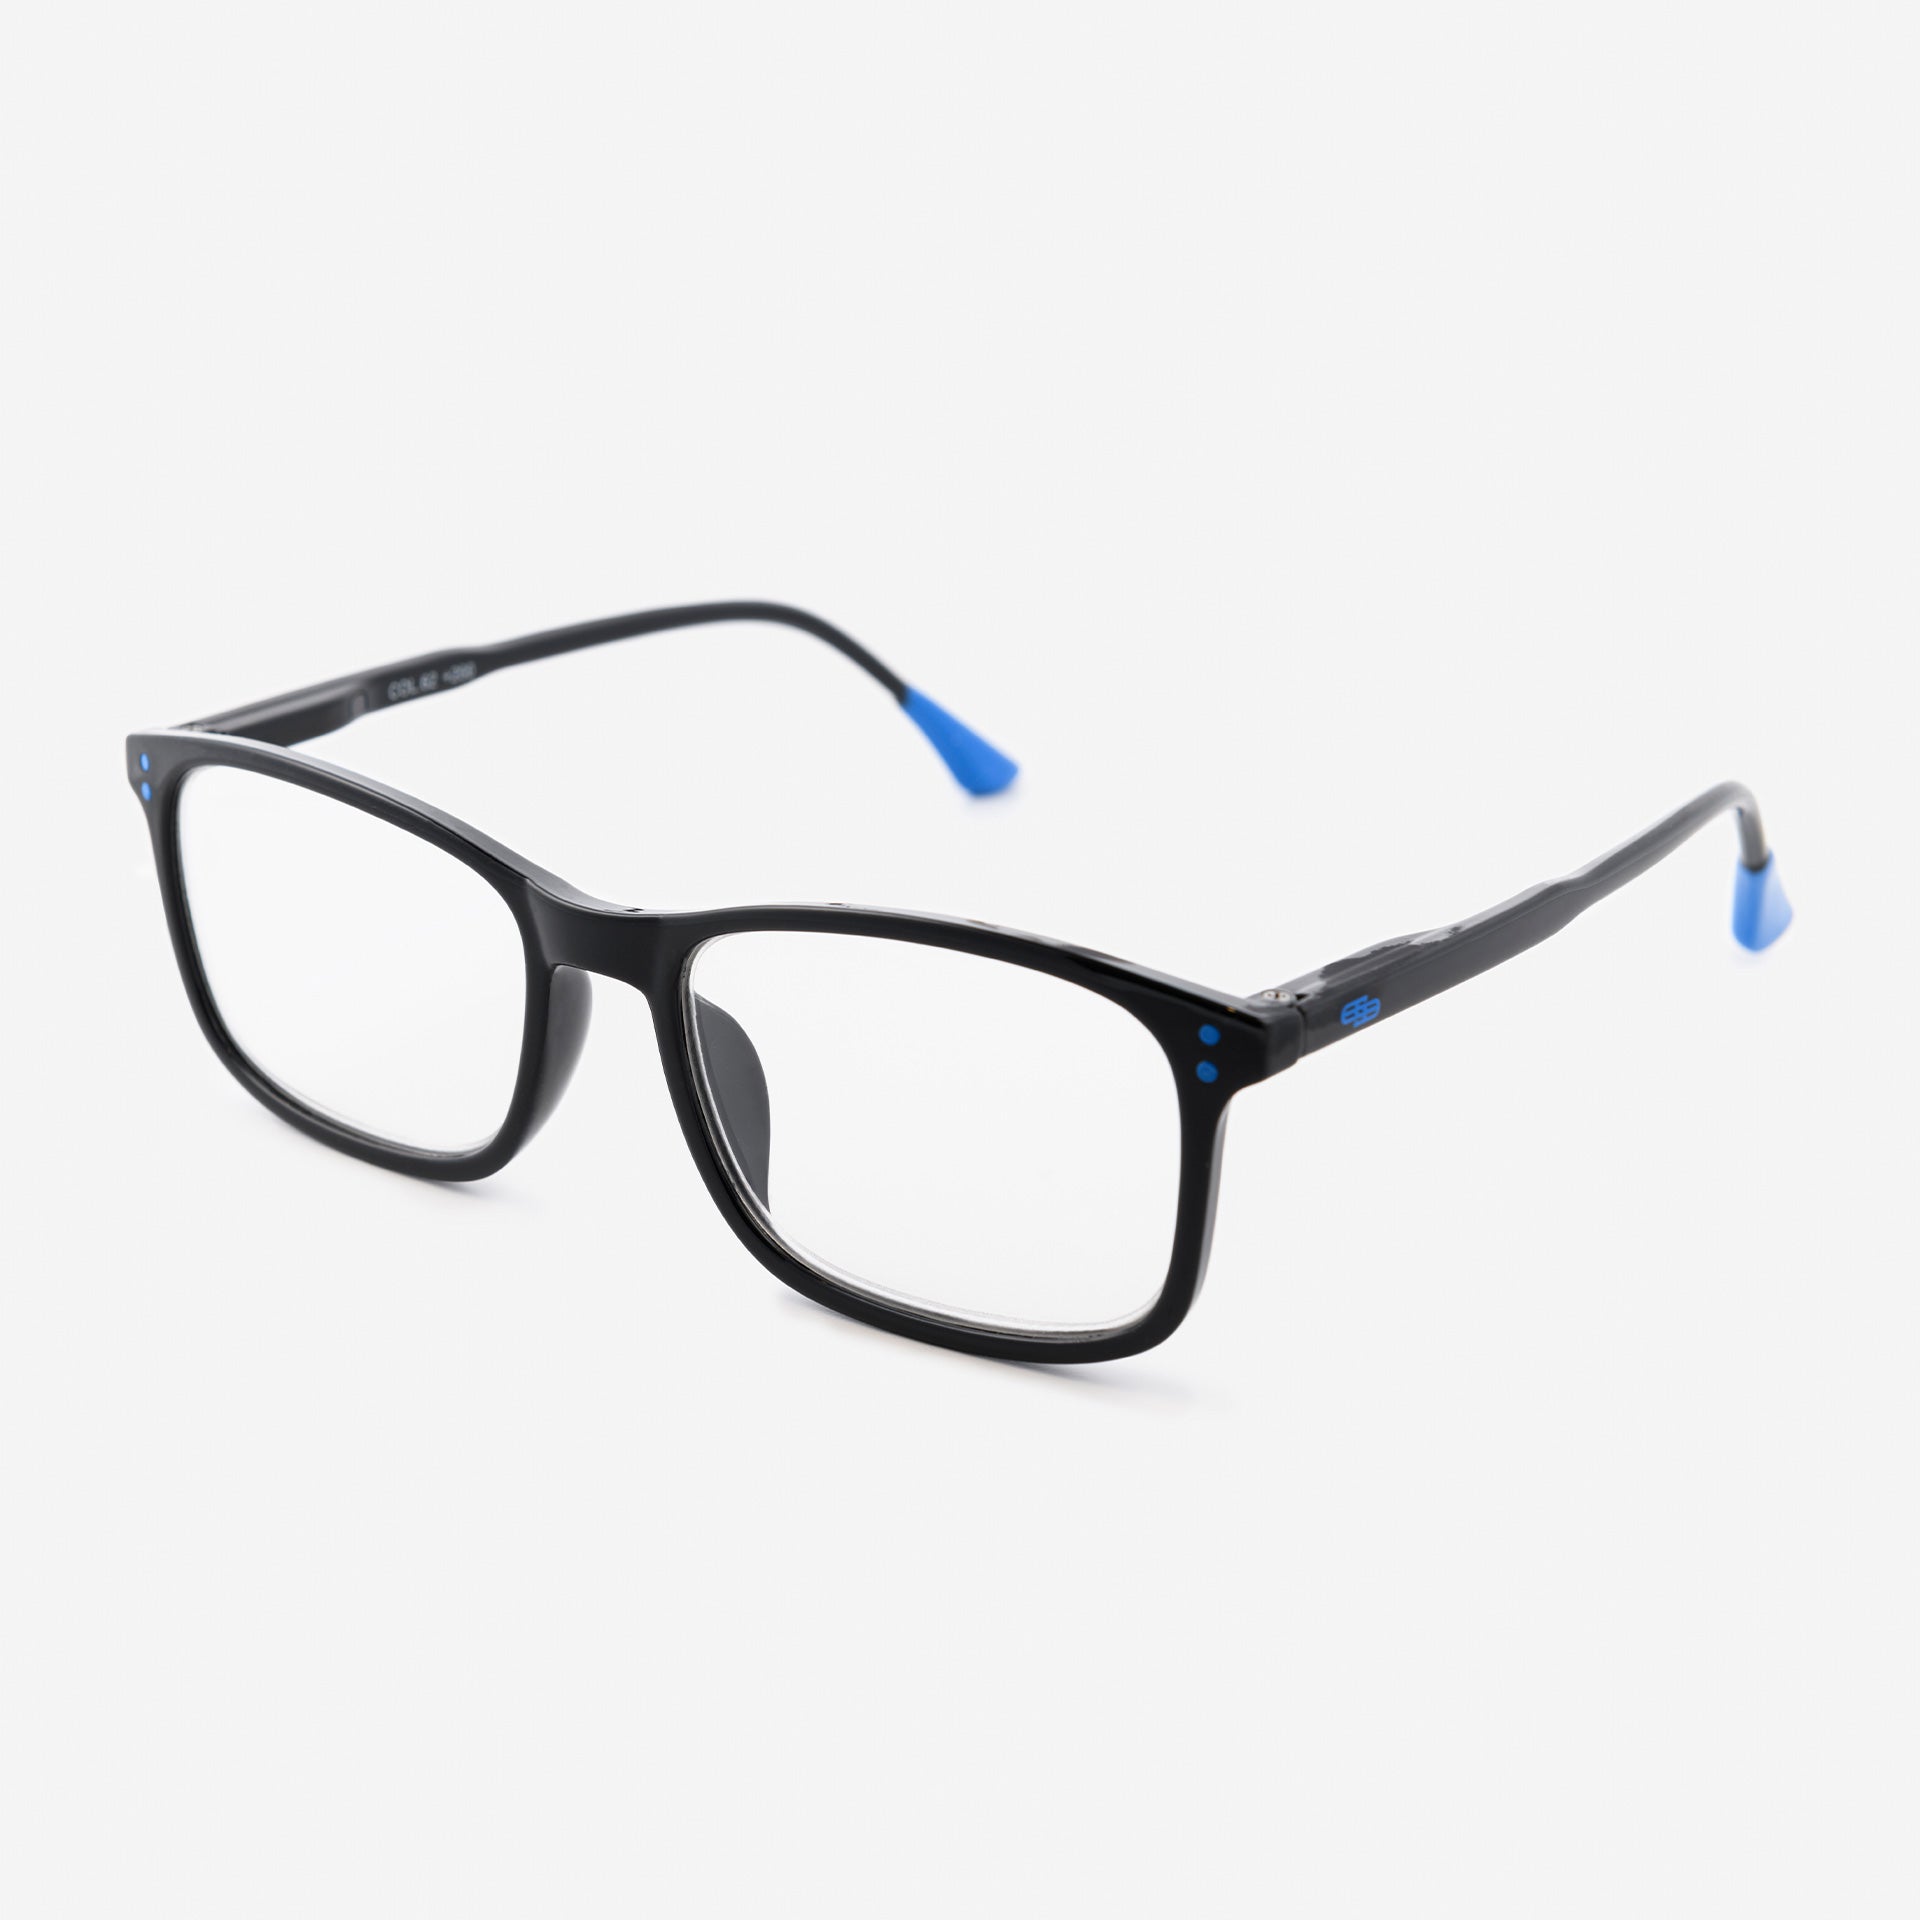 Black and blue square reading glasses